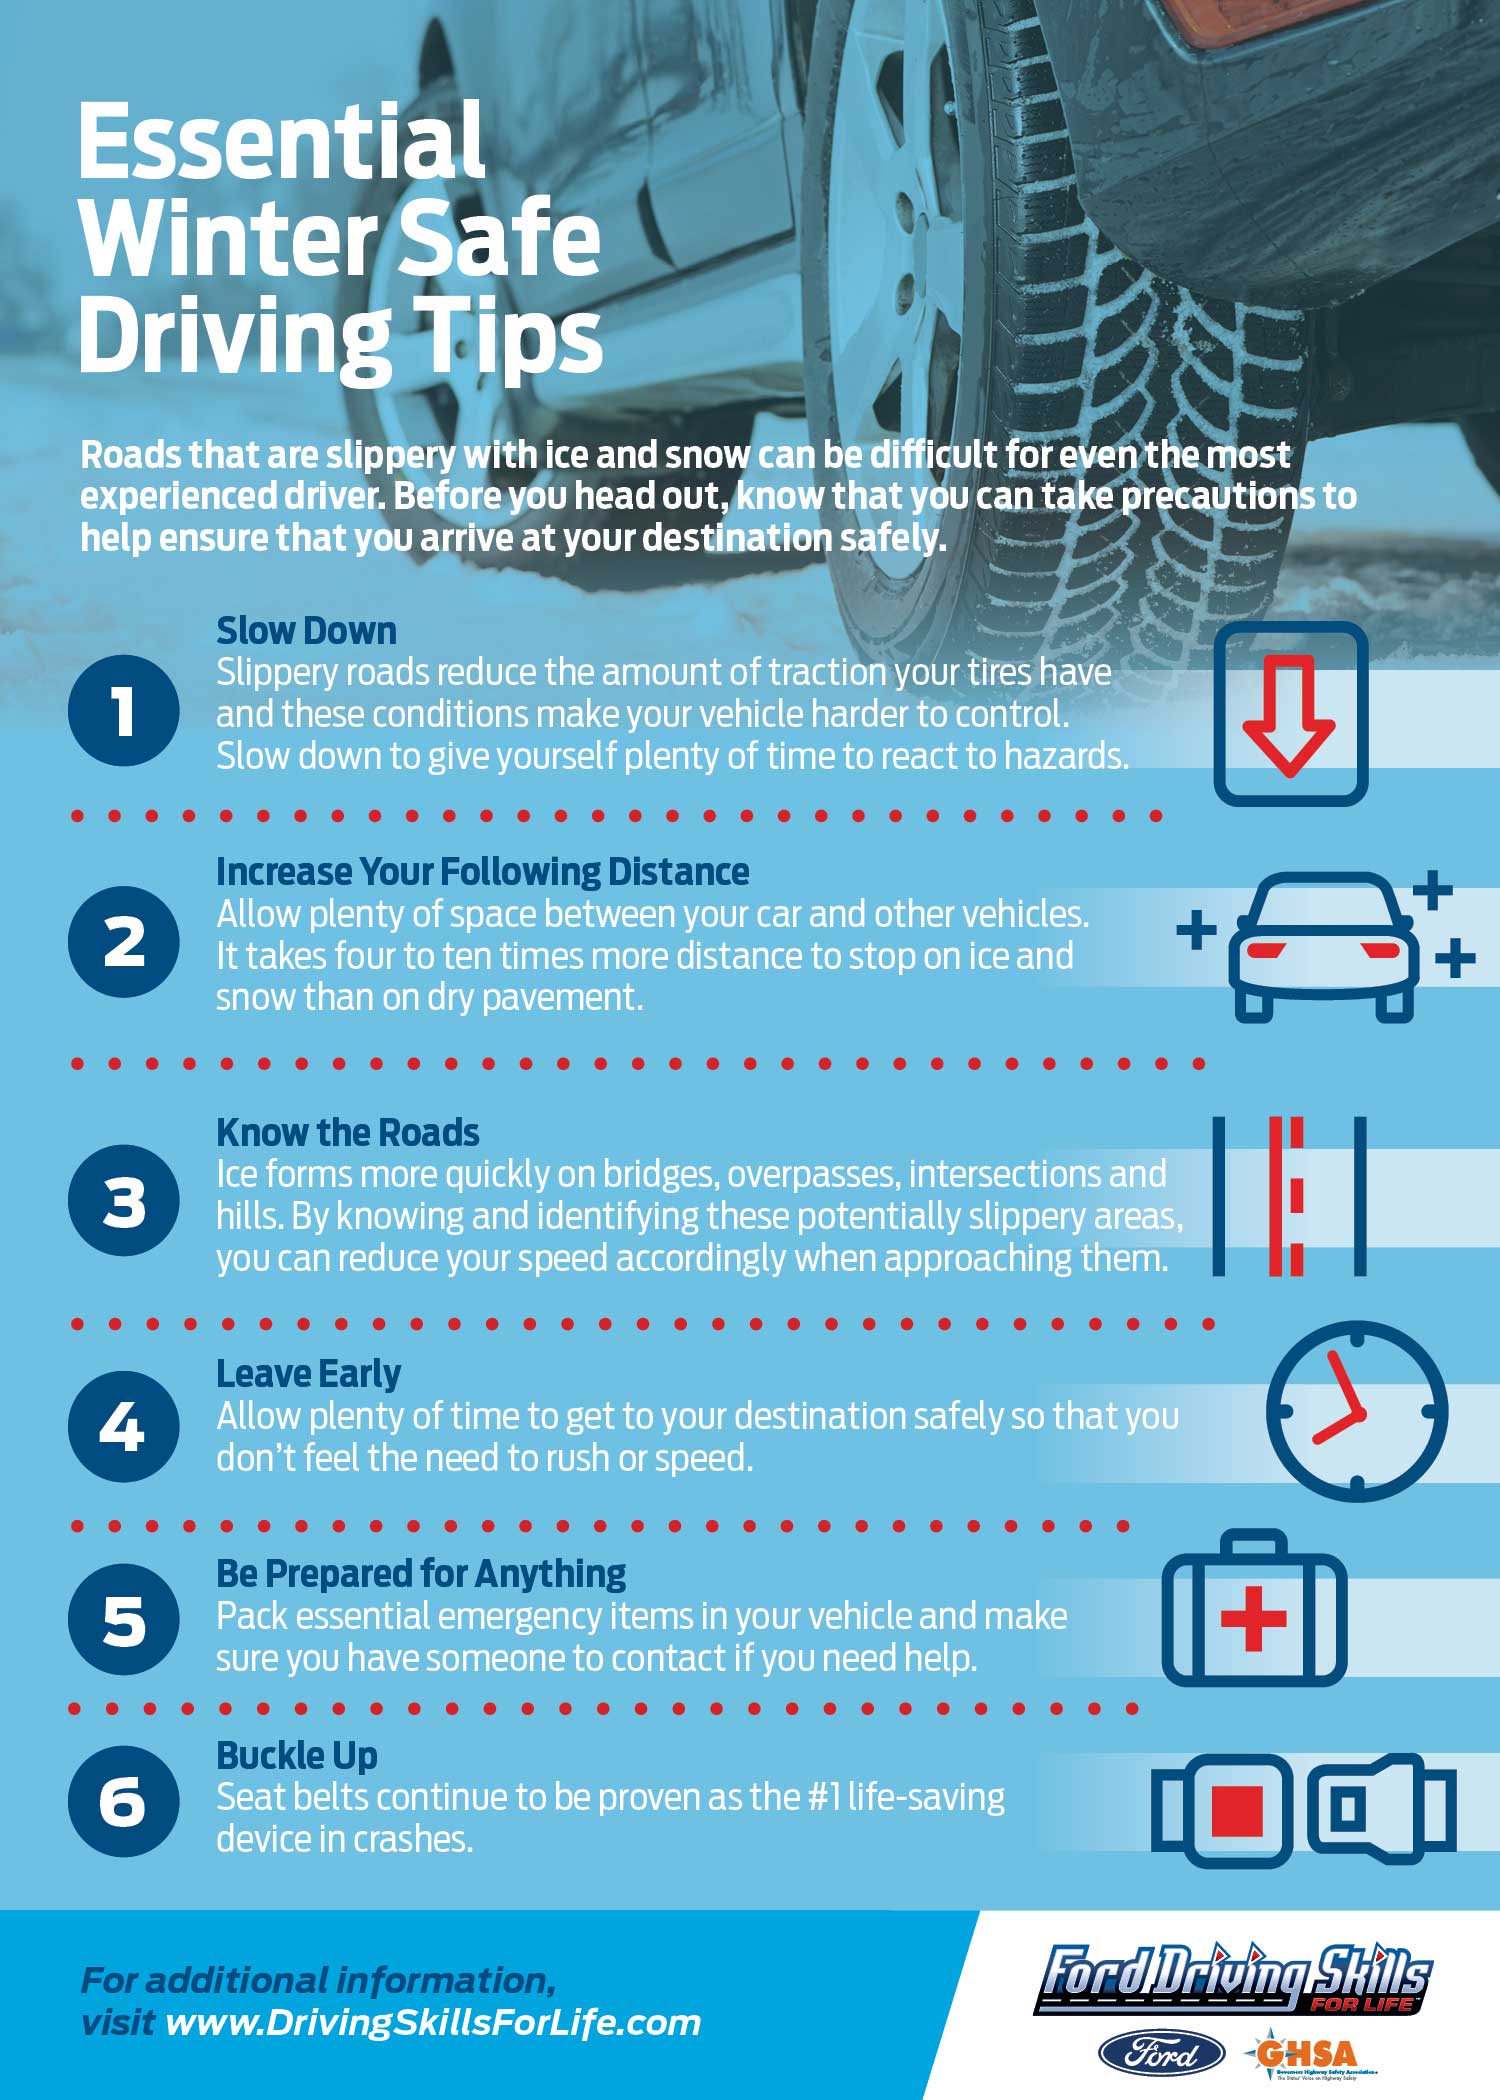 Steven Toyota's Top Tips for Winter Driving